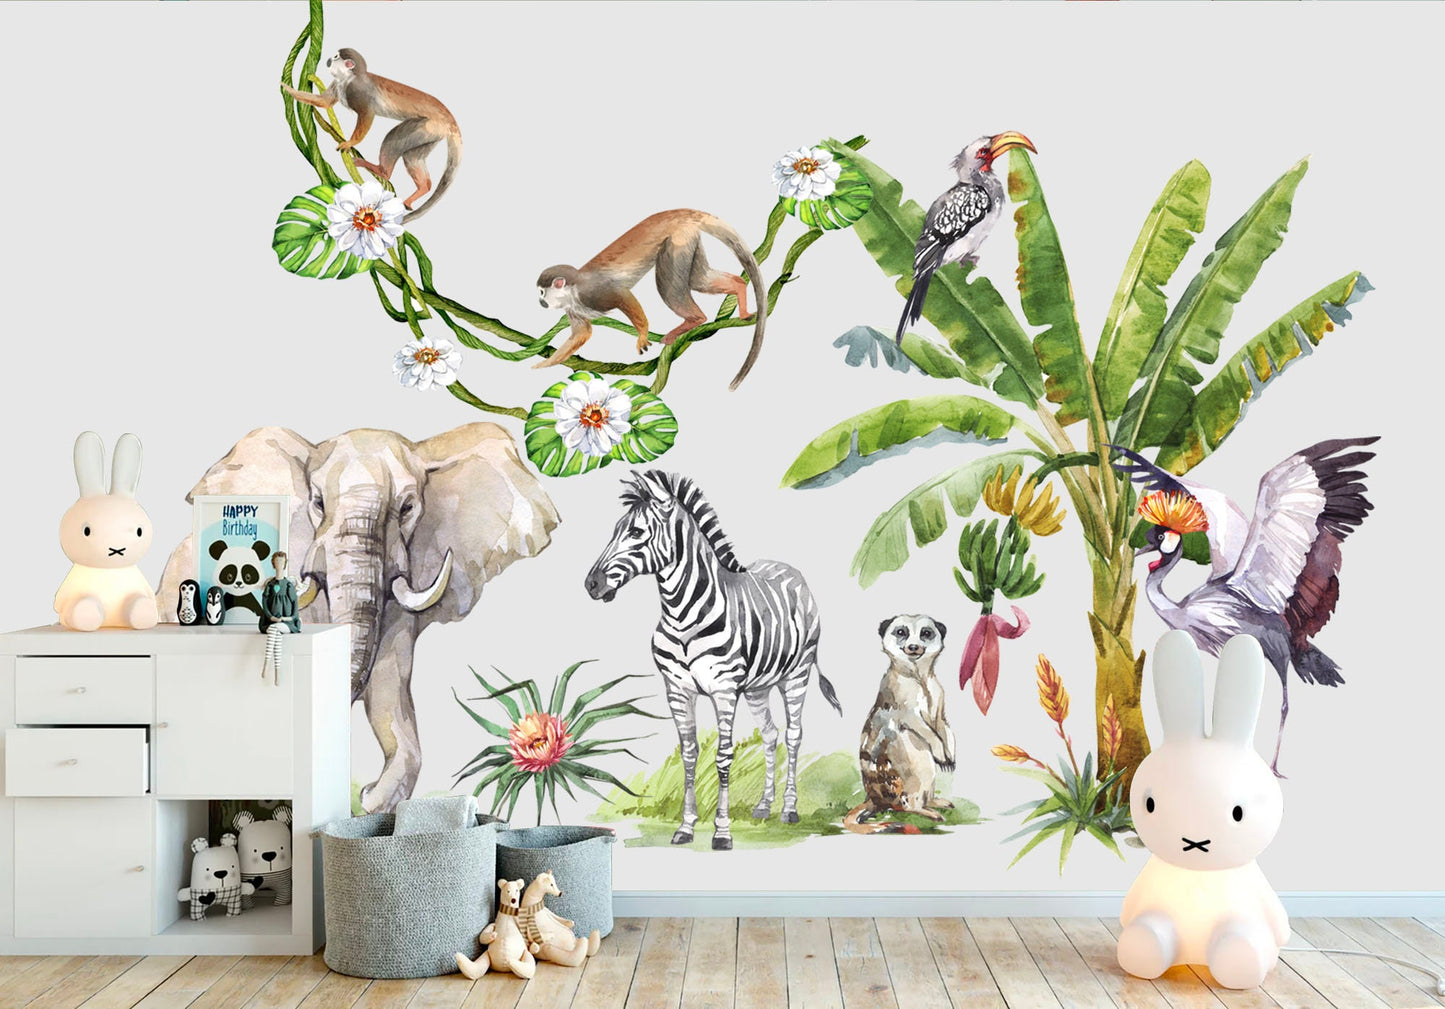 Jungle Safari Fun Animal Wall Decal - Vibrant Watercolor Style for Kids Room Decor - BR218